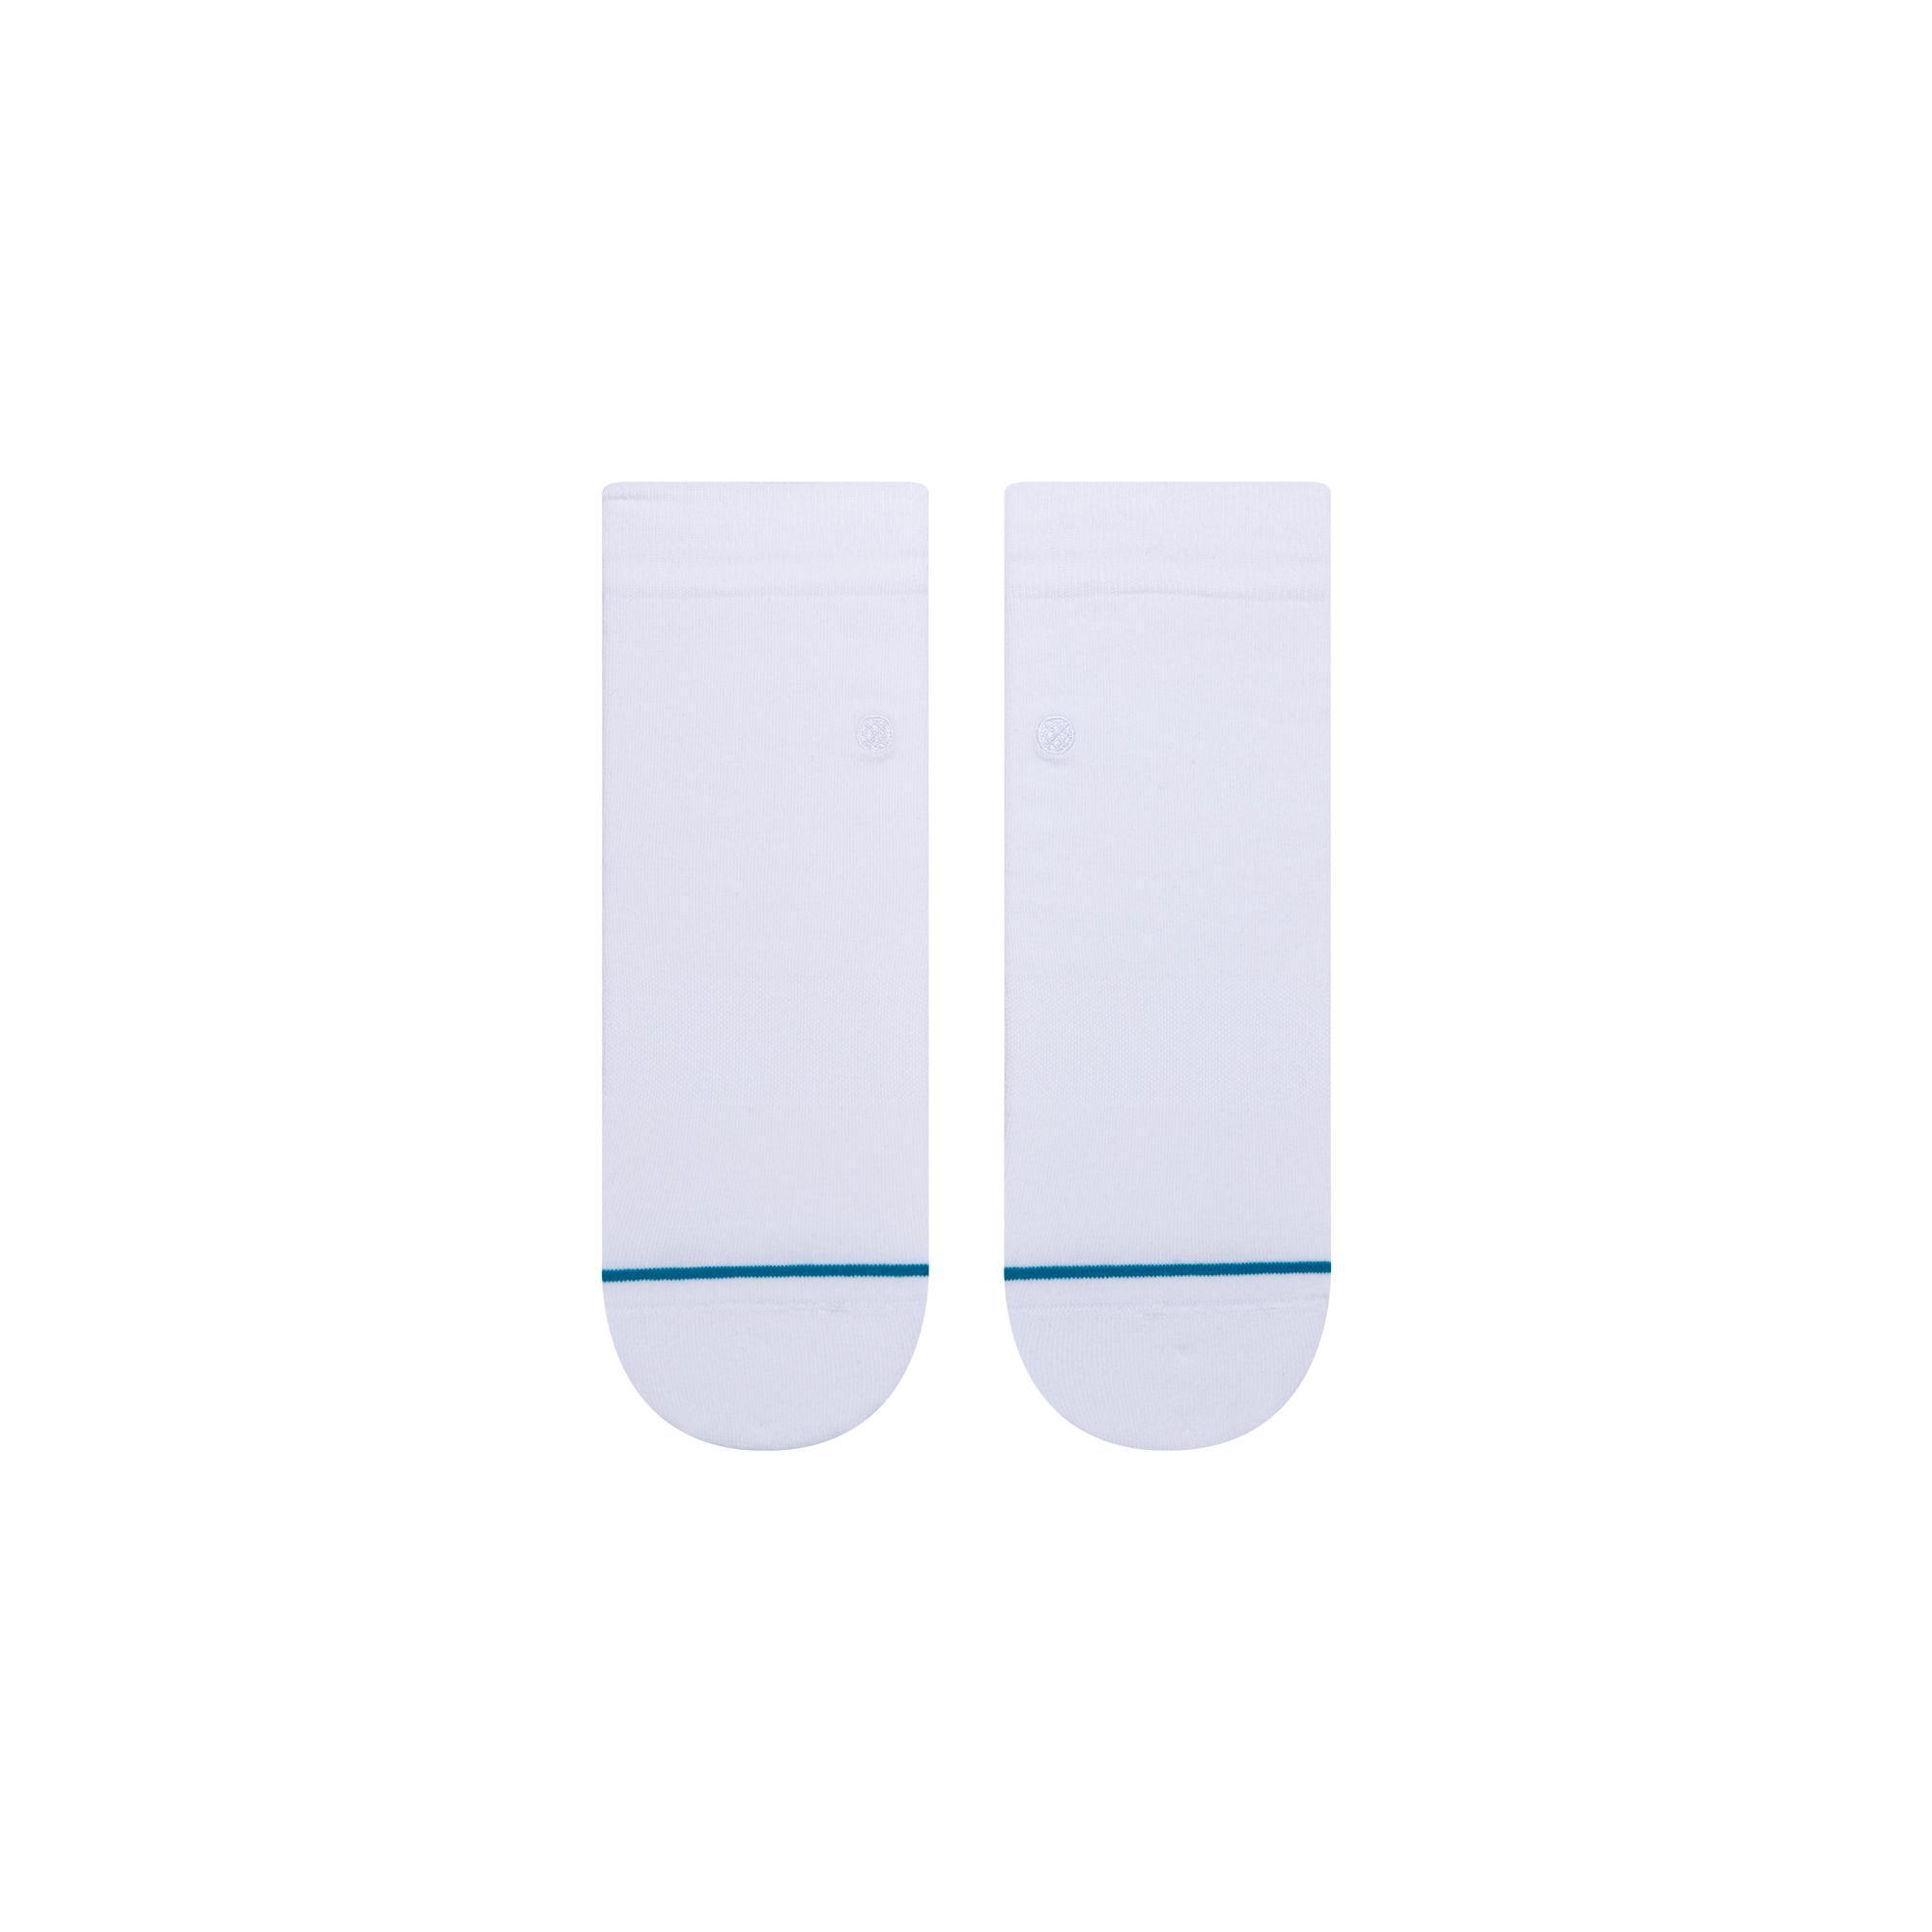 Stance Icon Quarter Crew Socks Product Image